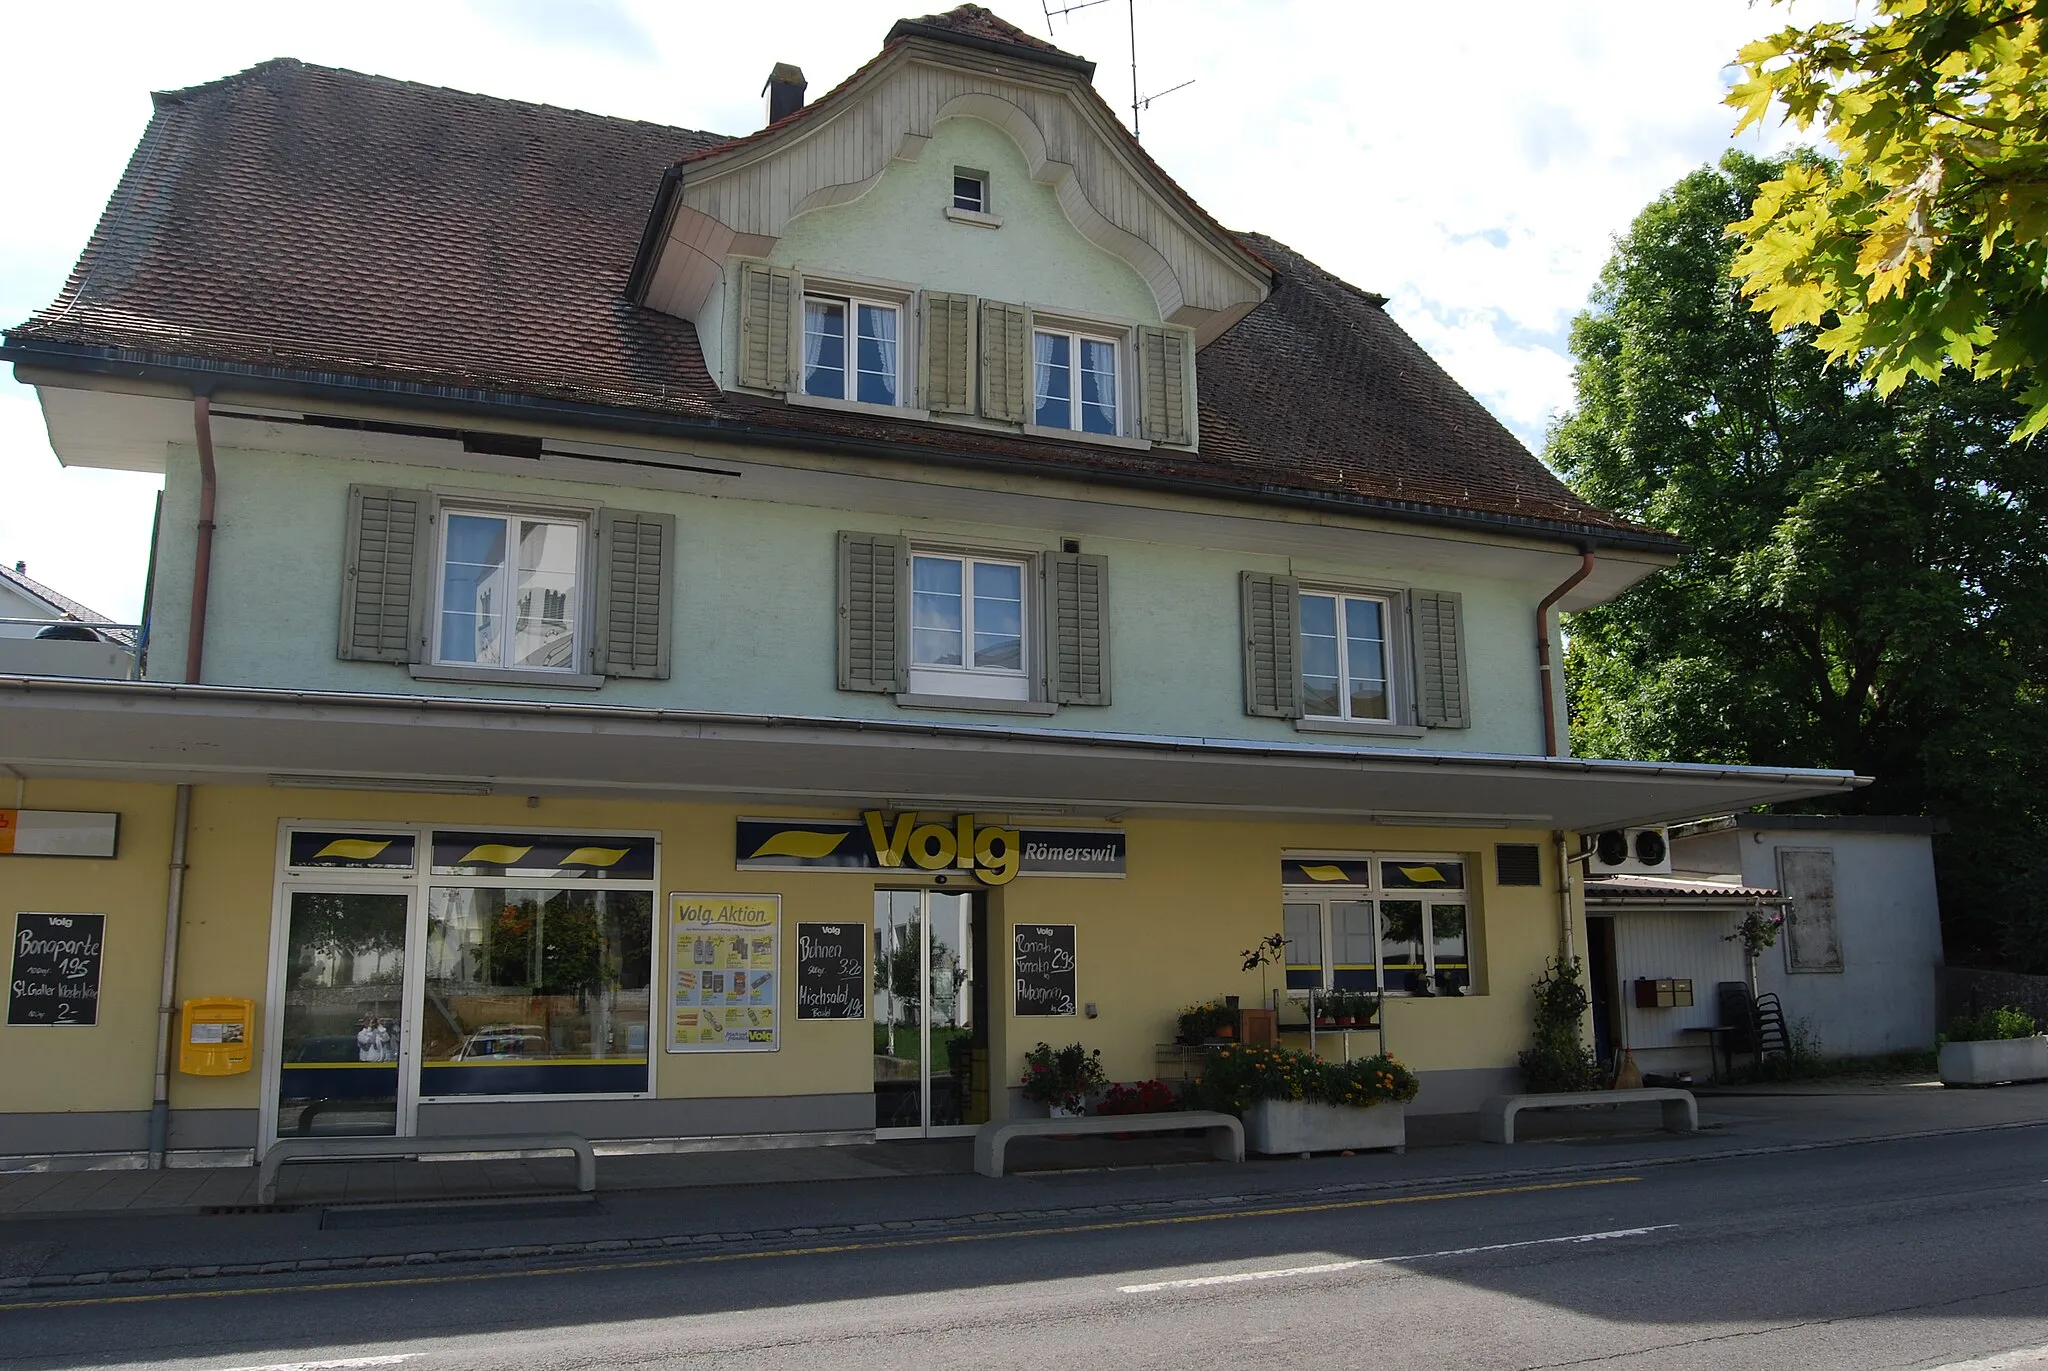 Photo showing: Römerswil, canton of Lucerne, Switzerland